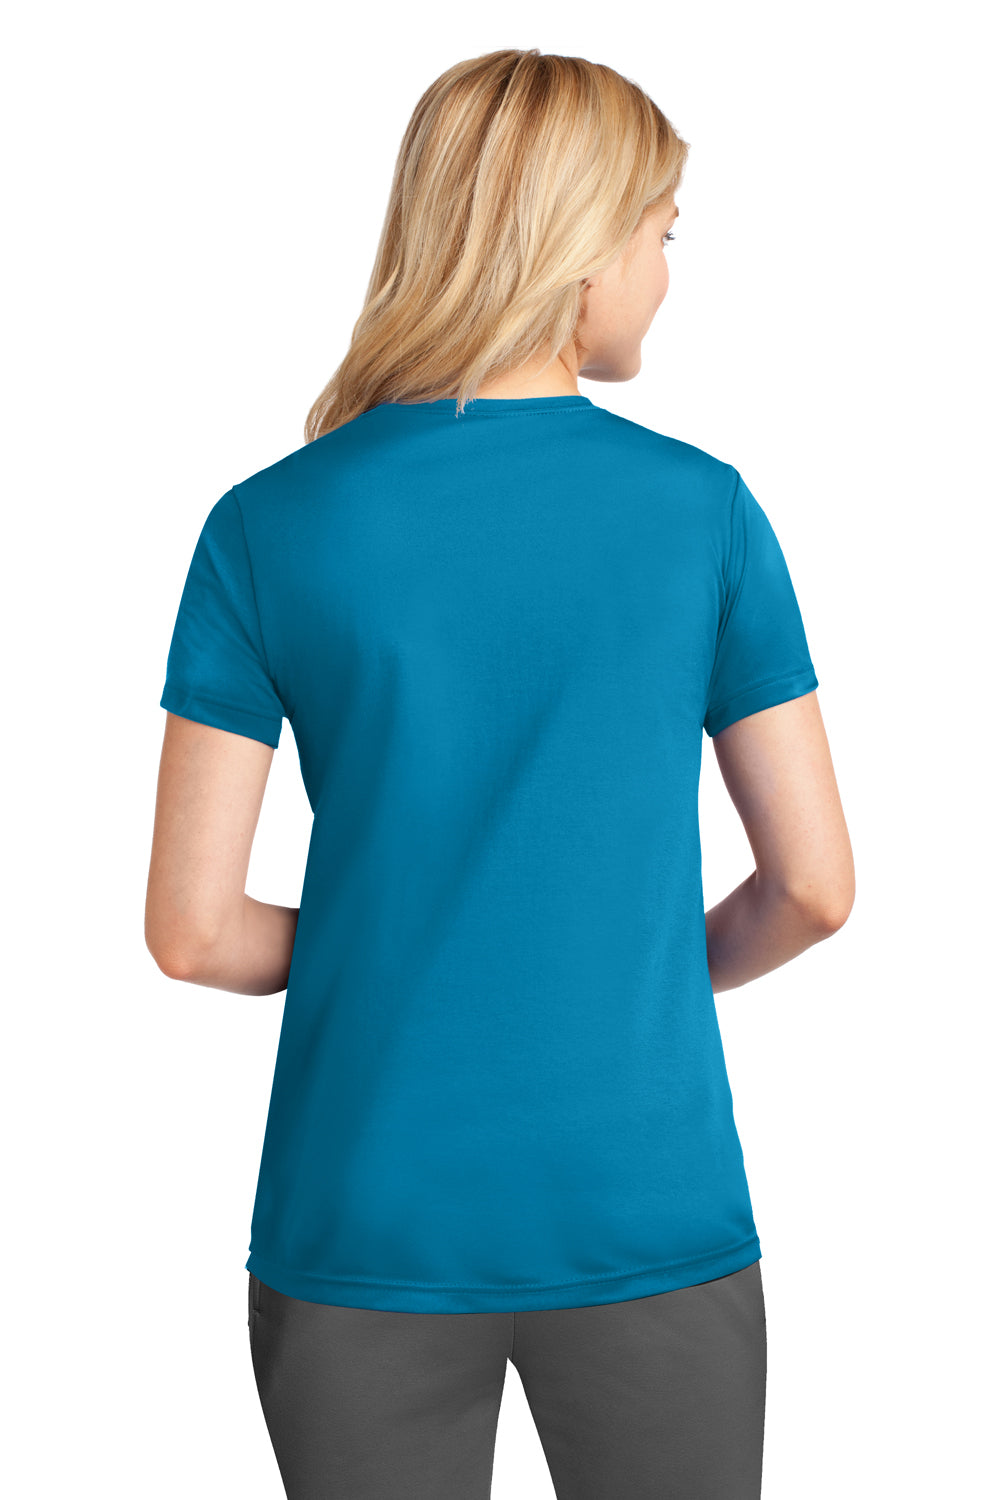 Port & Company LPC380 Womens Dry Zone Performance Moisture Wicking Short Sleeve Crewneck T-Shirt Neon Blue Back